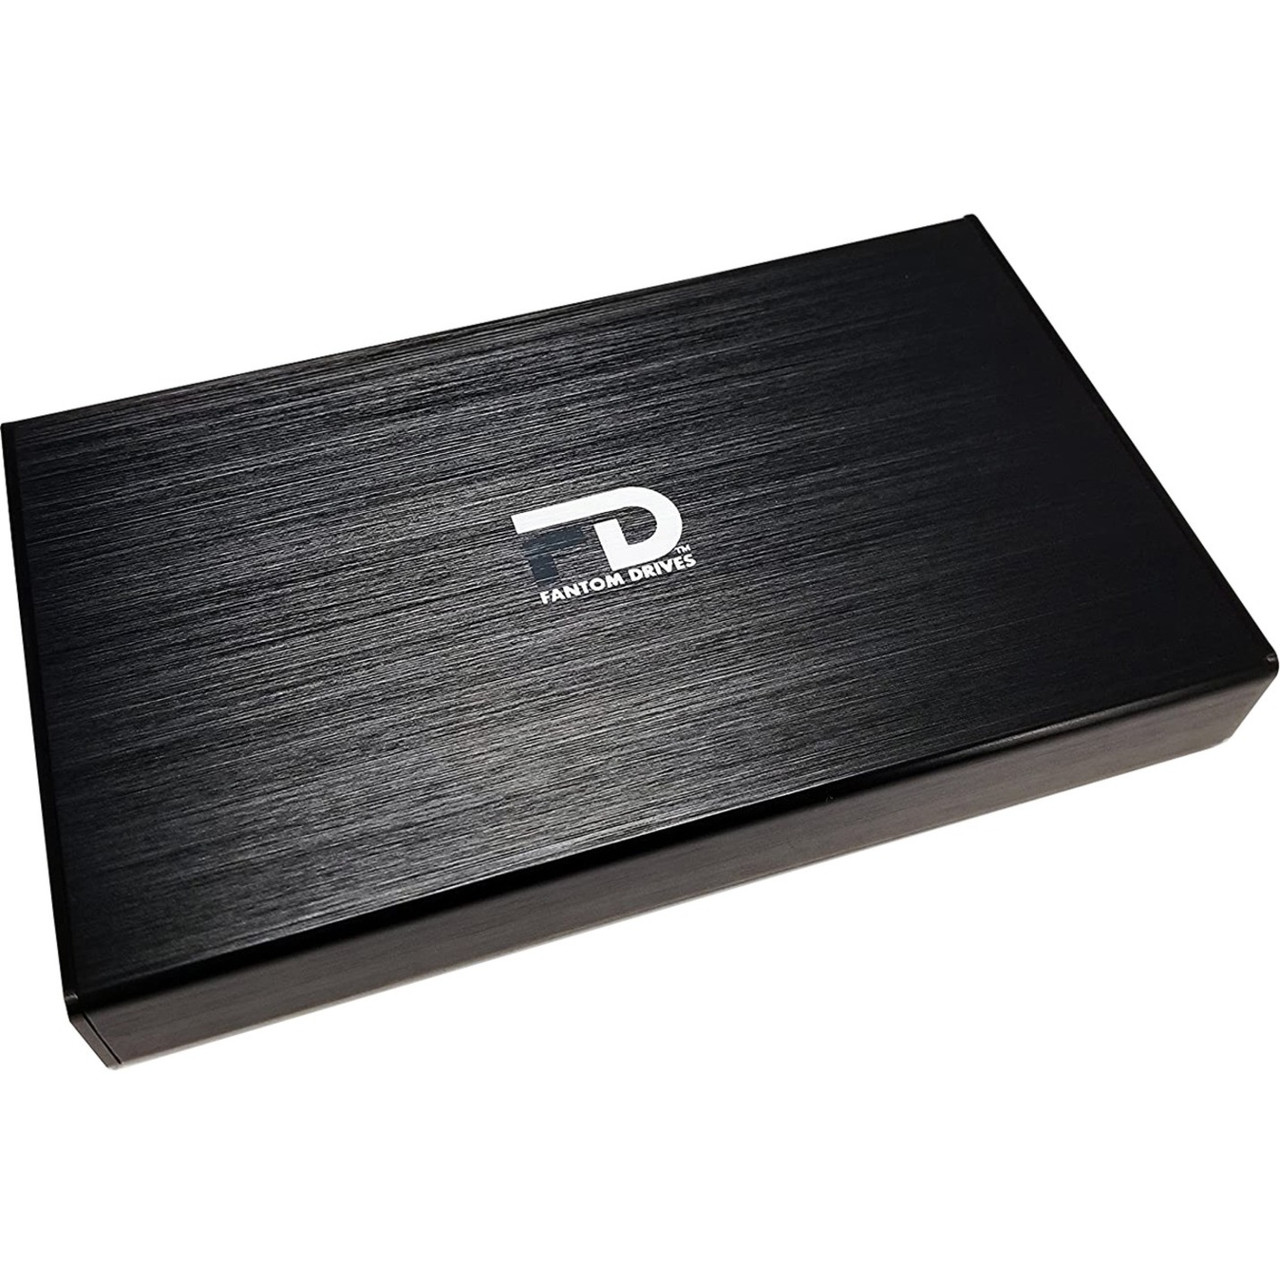 Fantom Drives FD 5TB PS4 Portable Hard Drive - USB 3.2 Gen 1